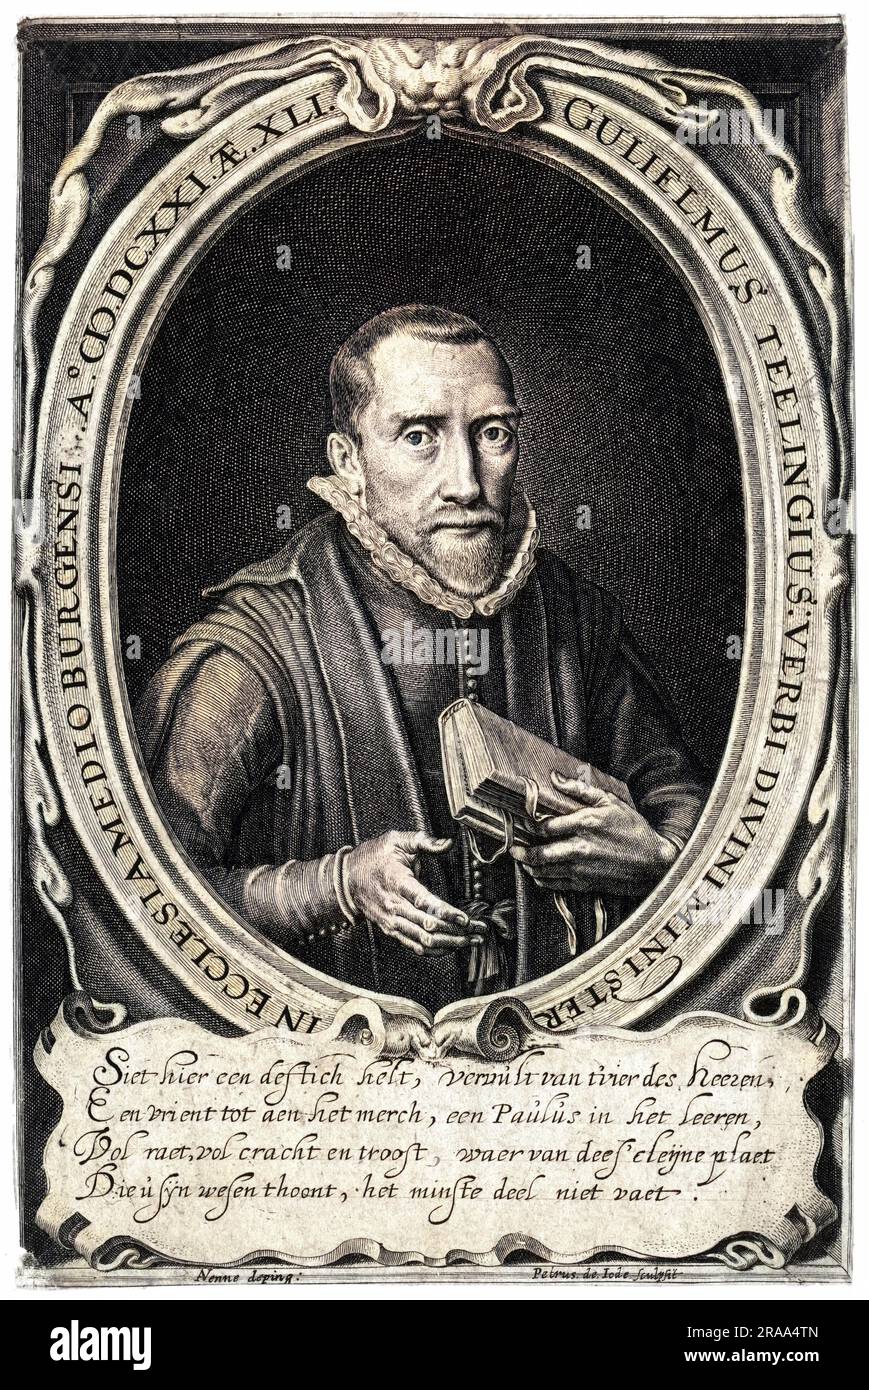 WILLEM TEELINCK Dutch churchman and theologian     Date: 1579 - 1629 Stock Photo